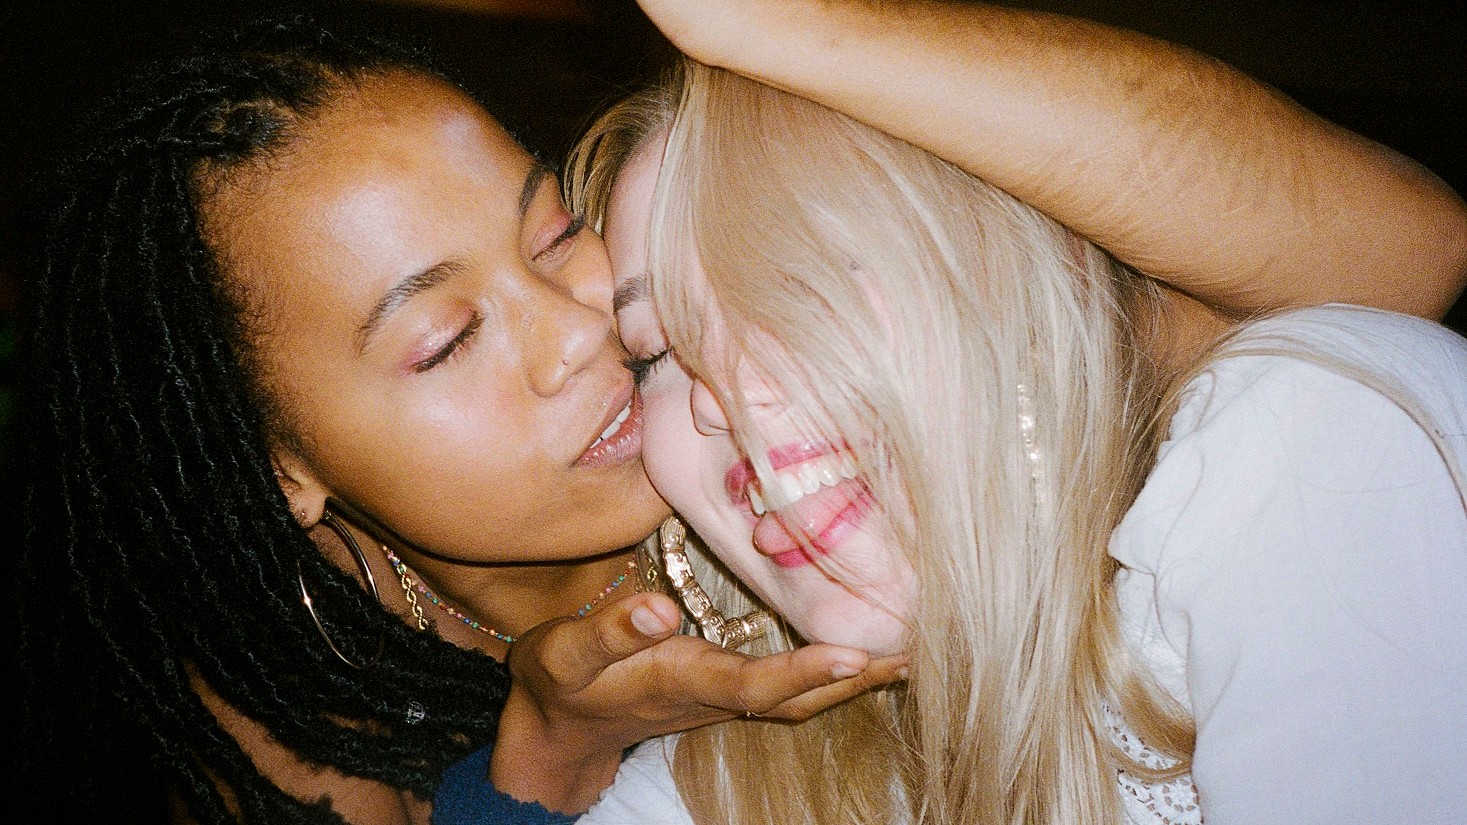 amber seaton share lesbians rub each other photos